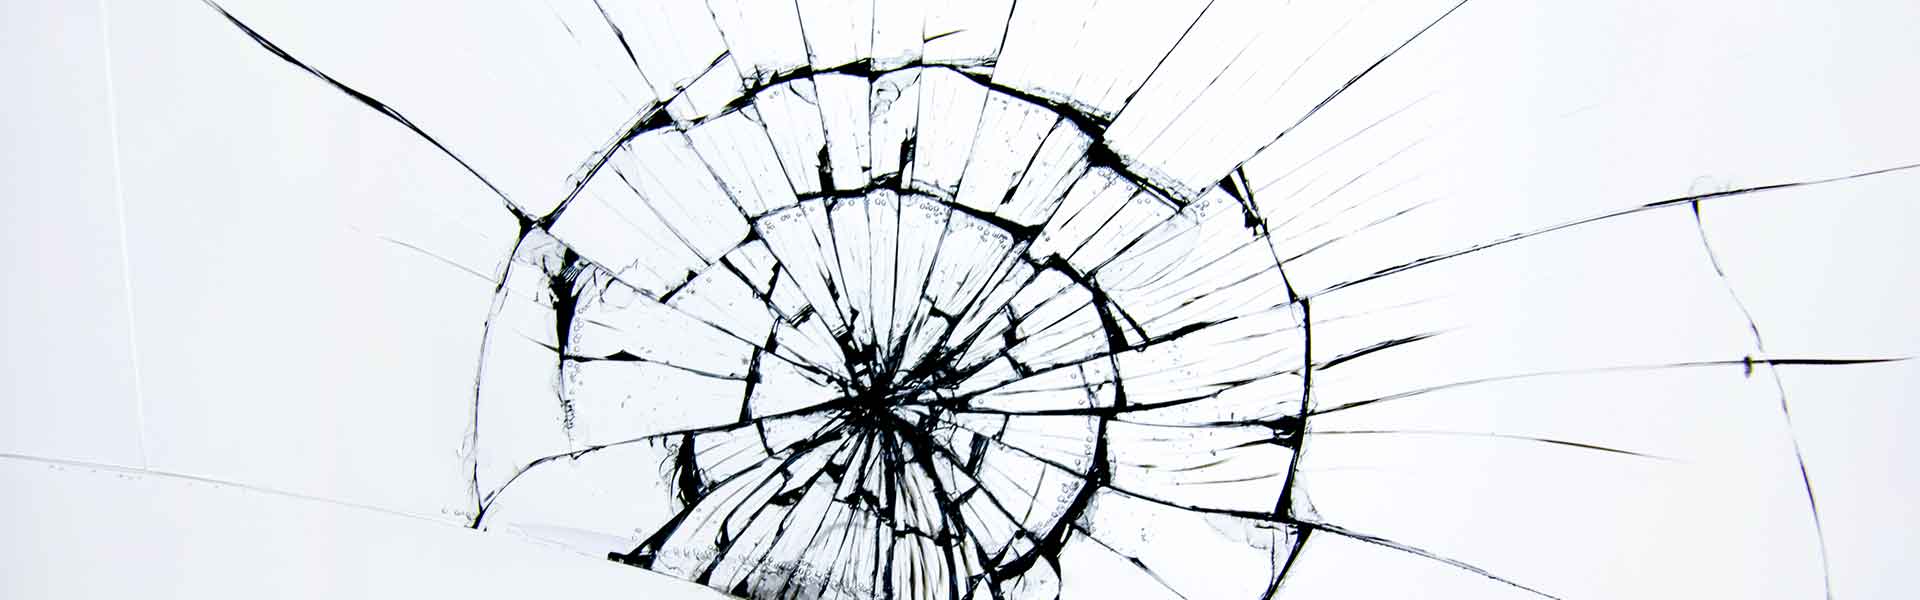 Cracked window glass